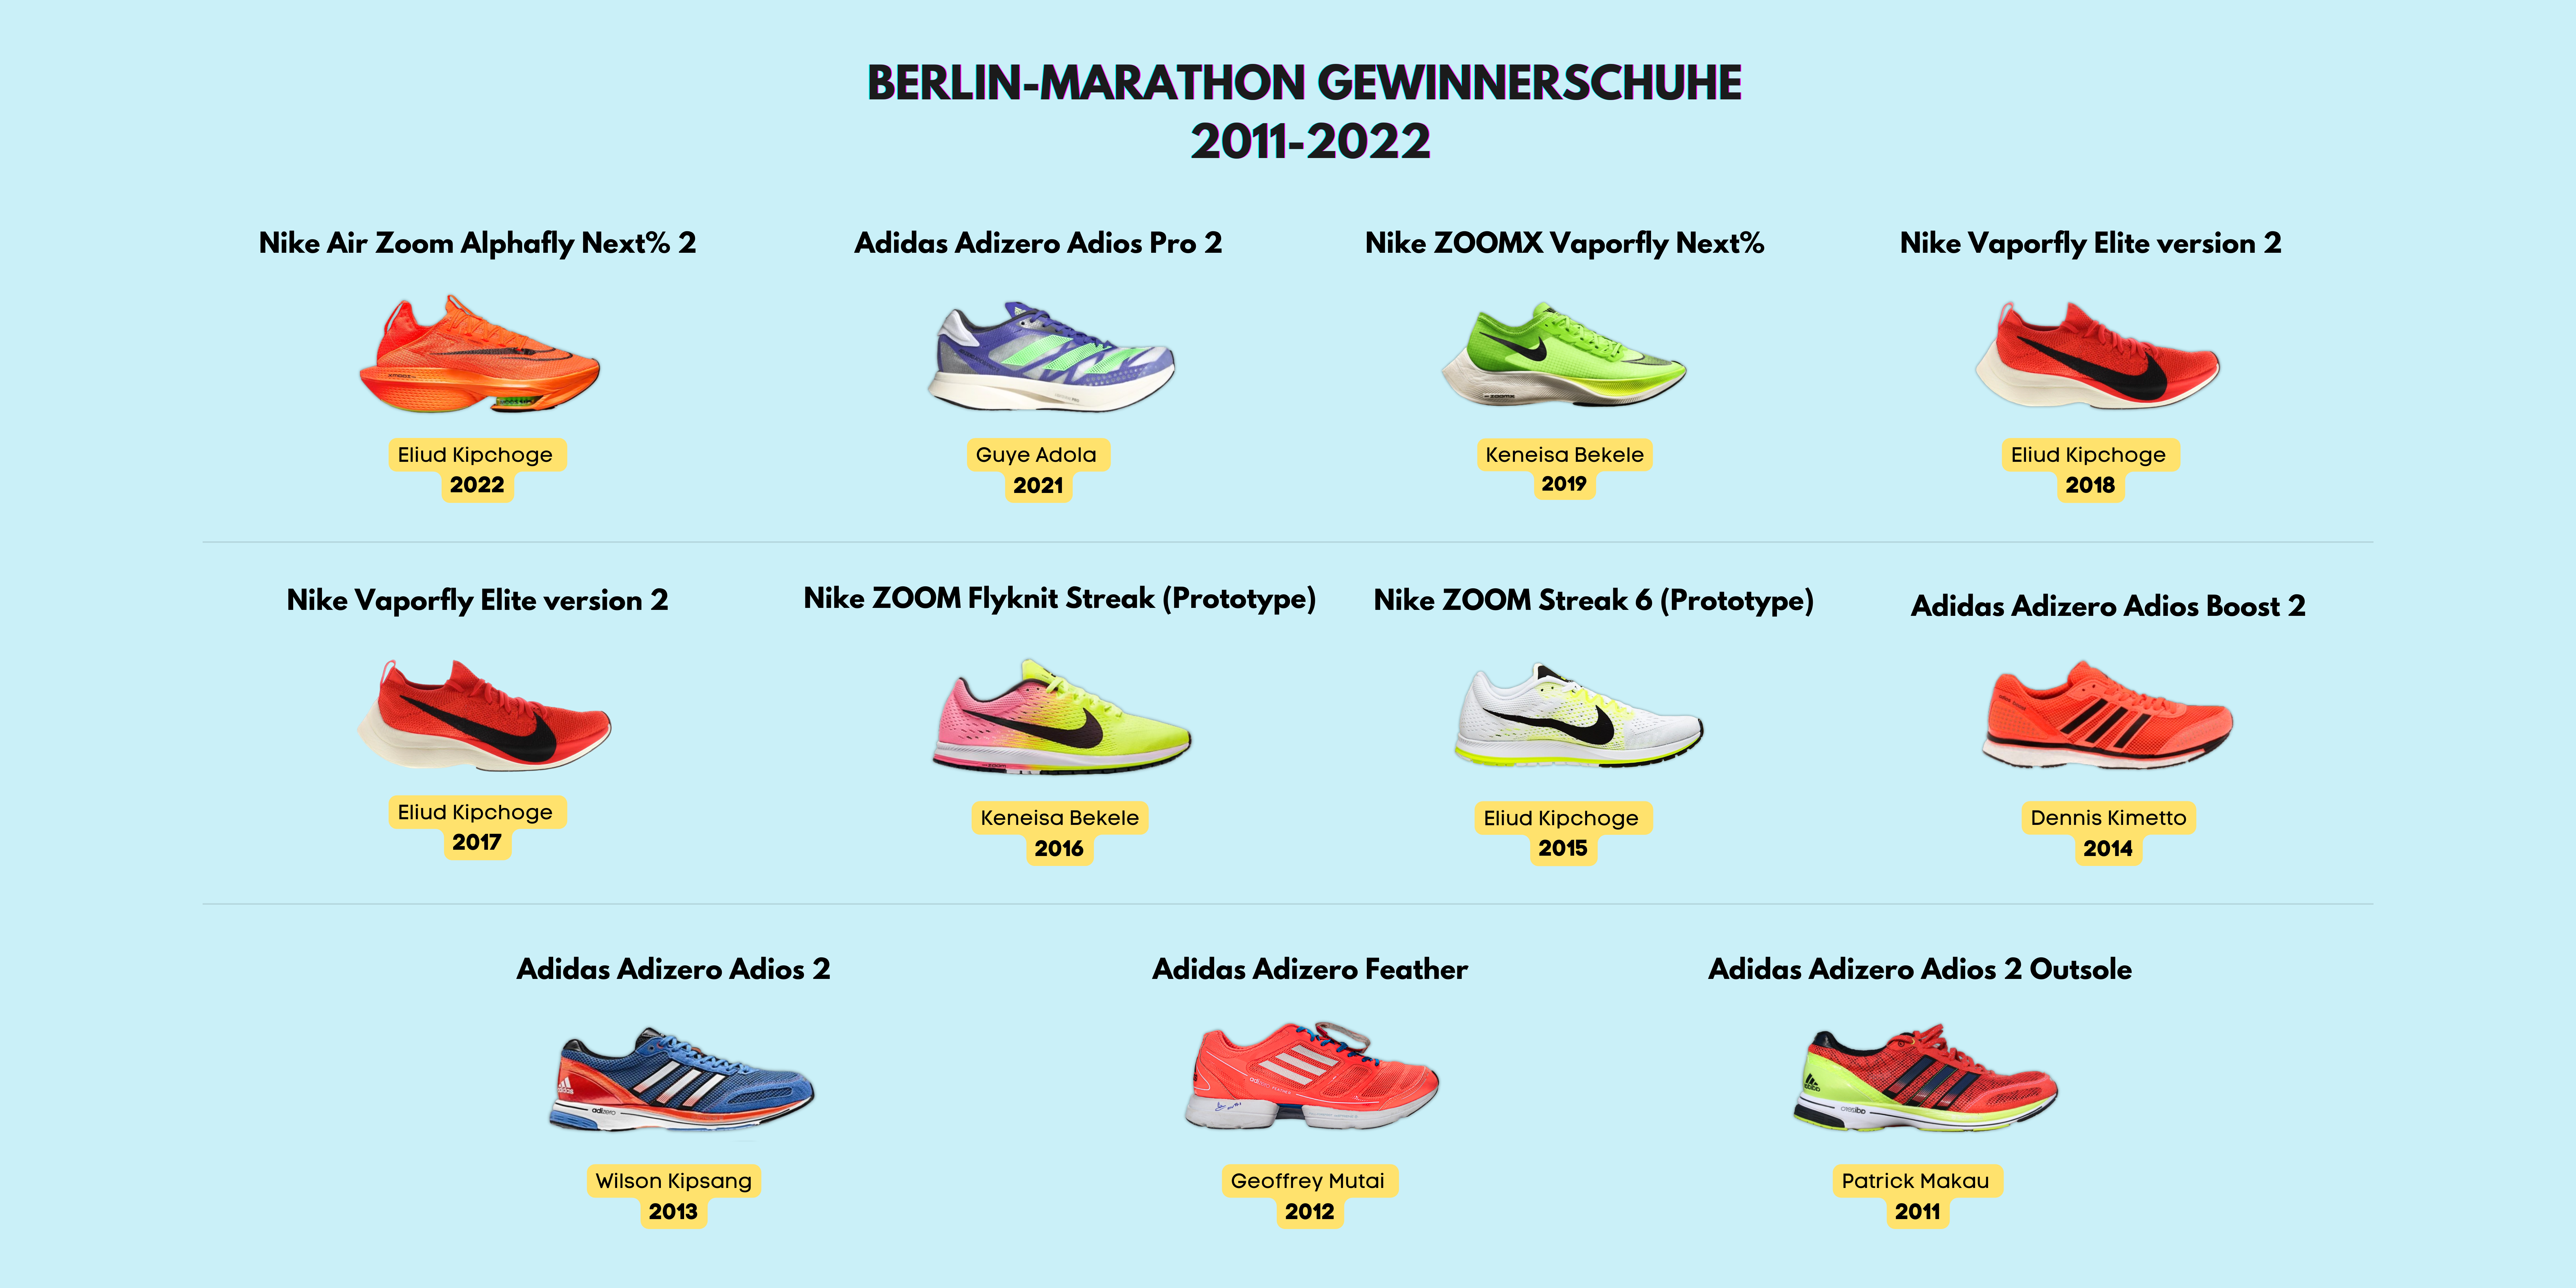 Die besten Laufschuhe. Gewinnerschuhe des Berlin-Marathons 2011-2022